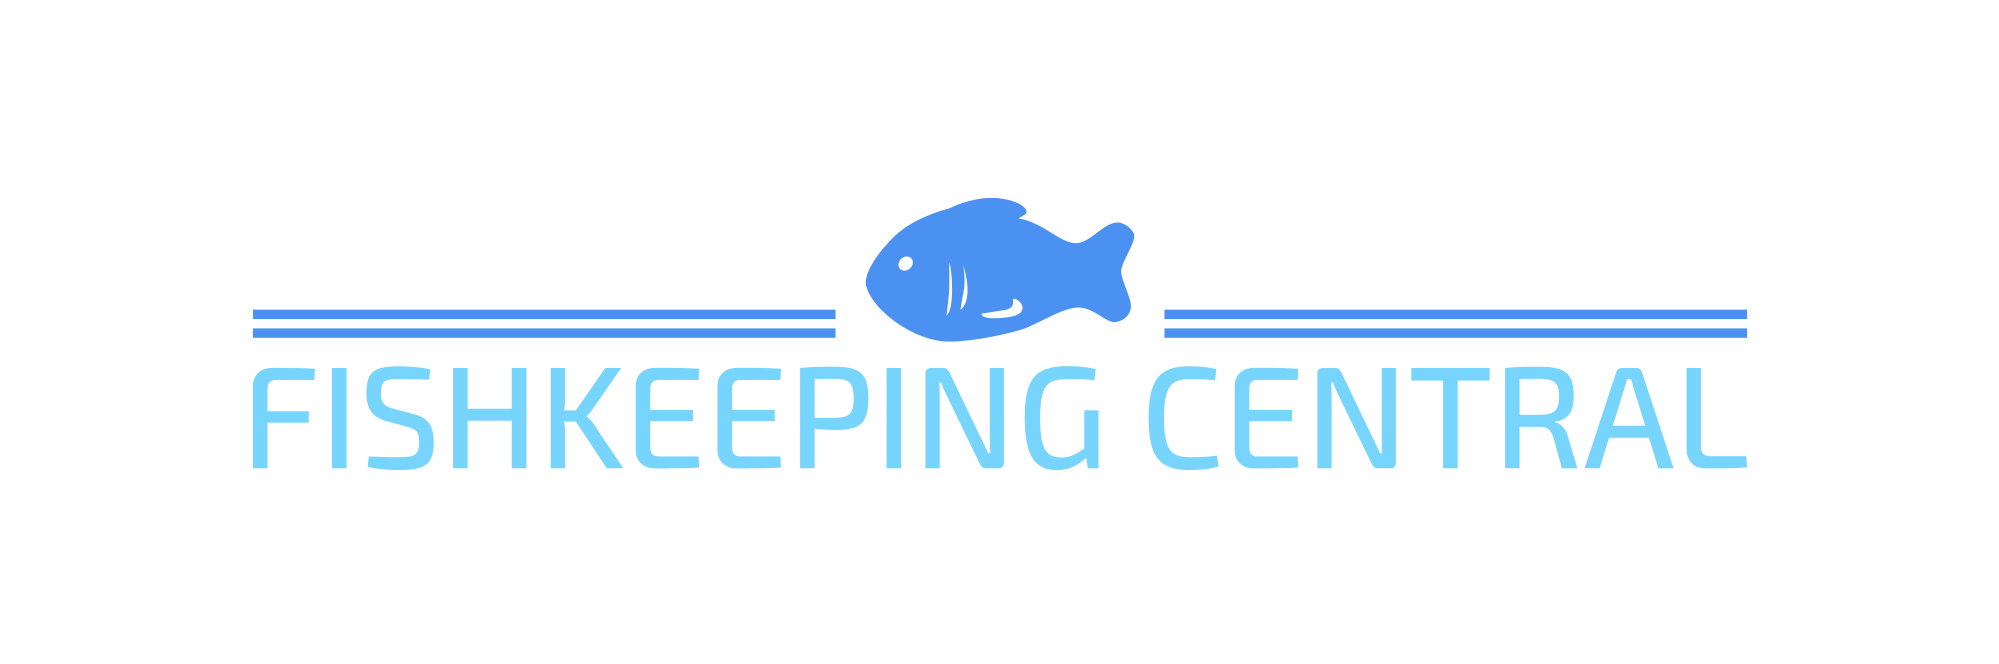 Fishkeeping Central Logo